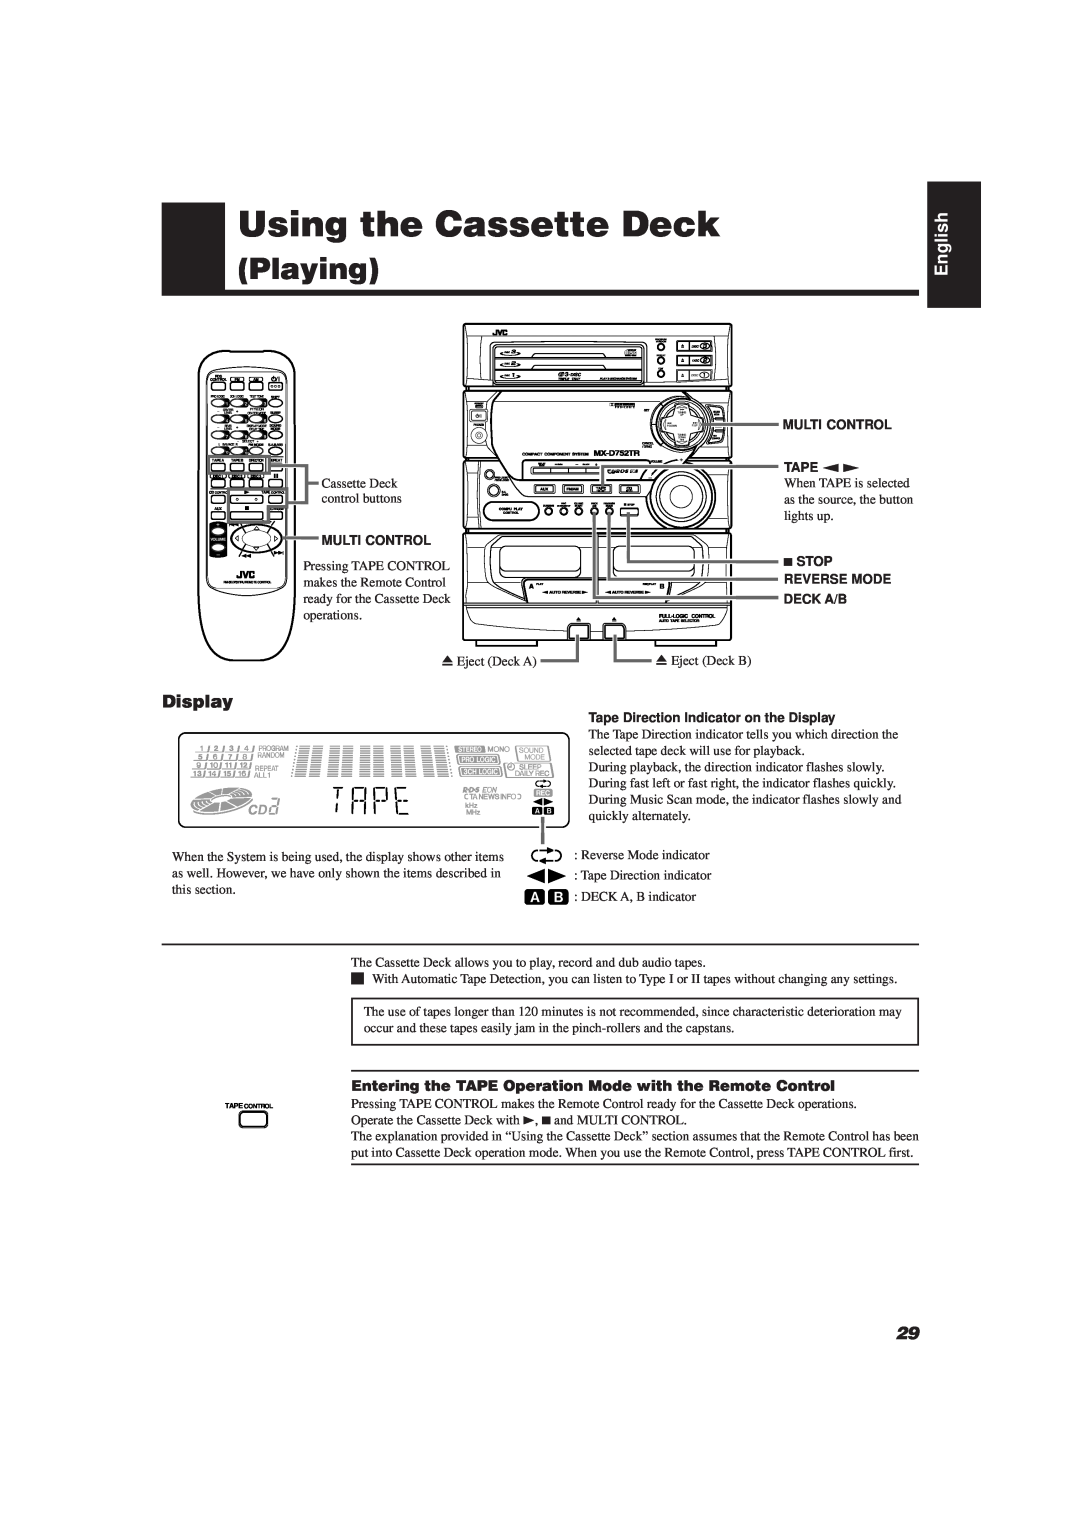 JVC CA-D752TR Using the Cassette Deck, Playing, English, Display, Multi Control, Tape Control, PRO LOGIC 3CH LOGIC, Rear 